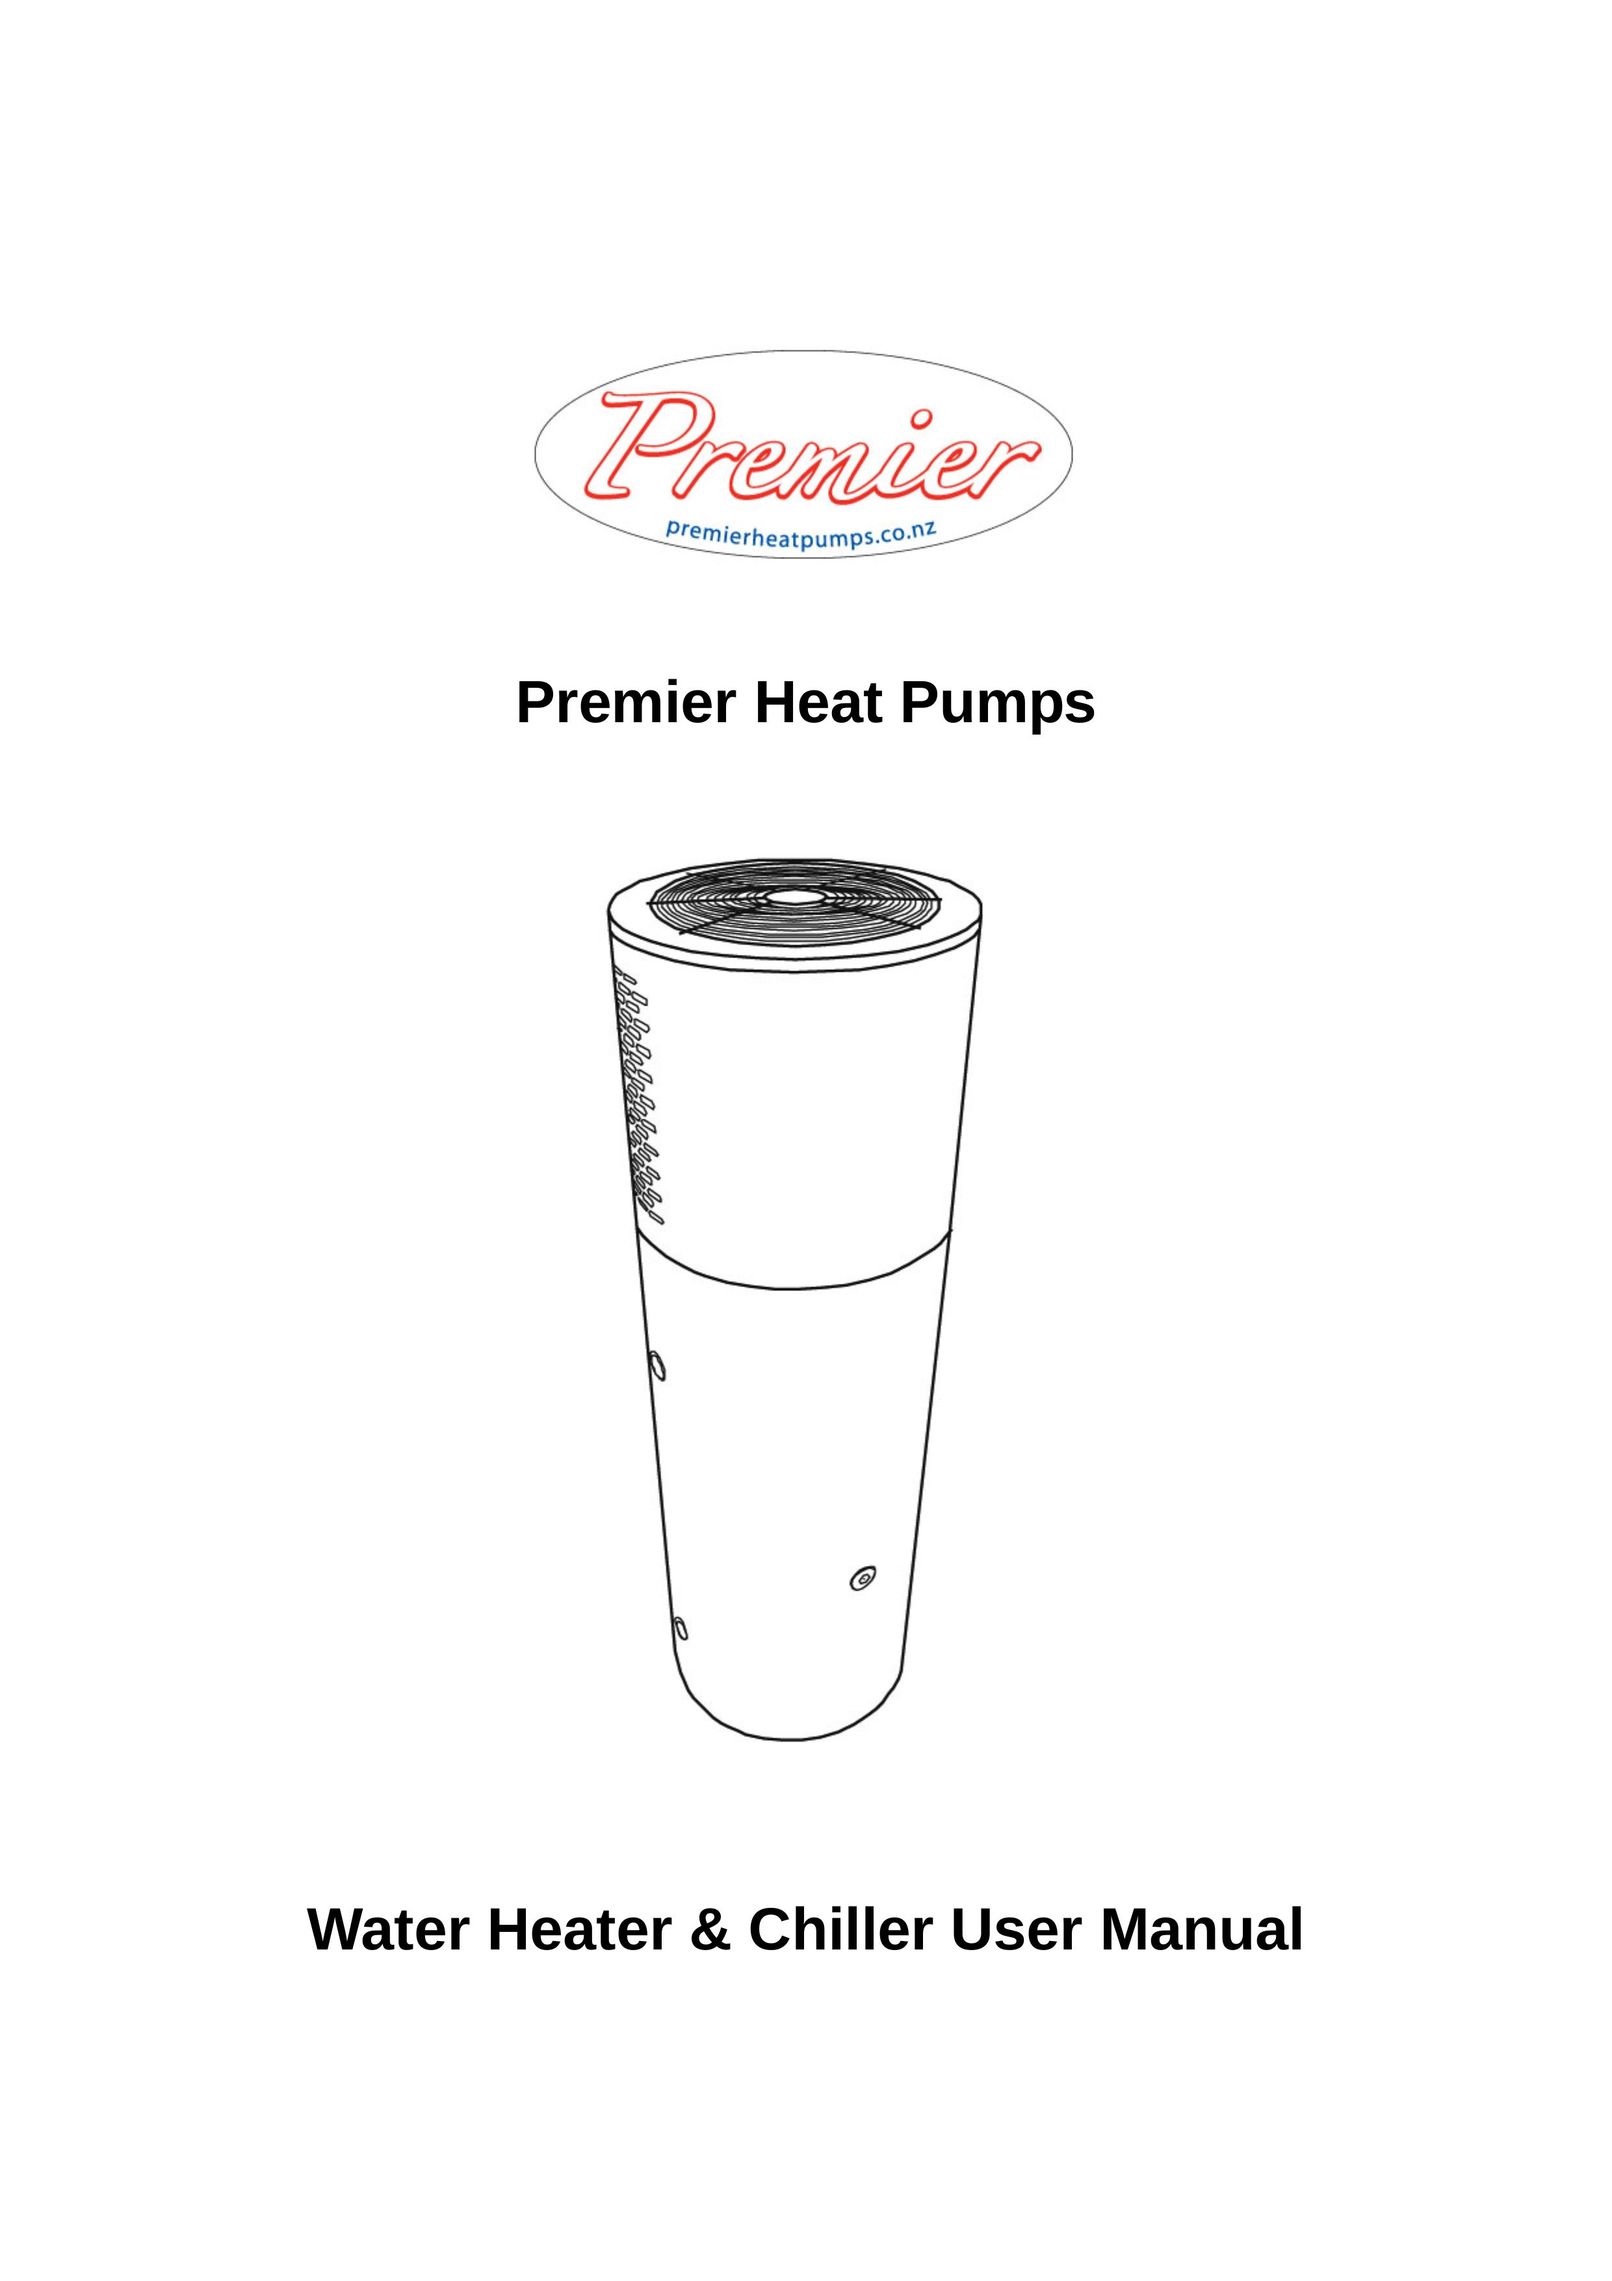 Premier PHP HWC-200 Heat Pump User Manual